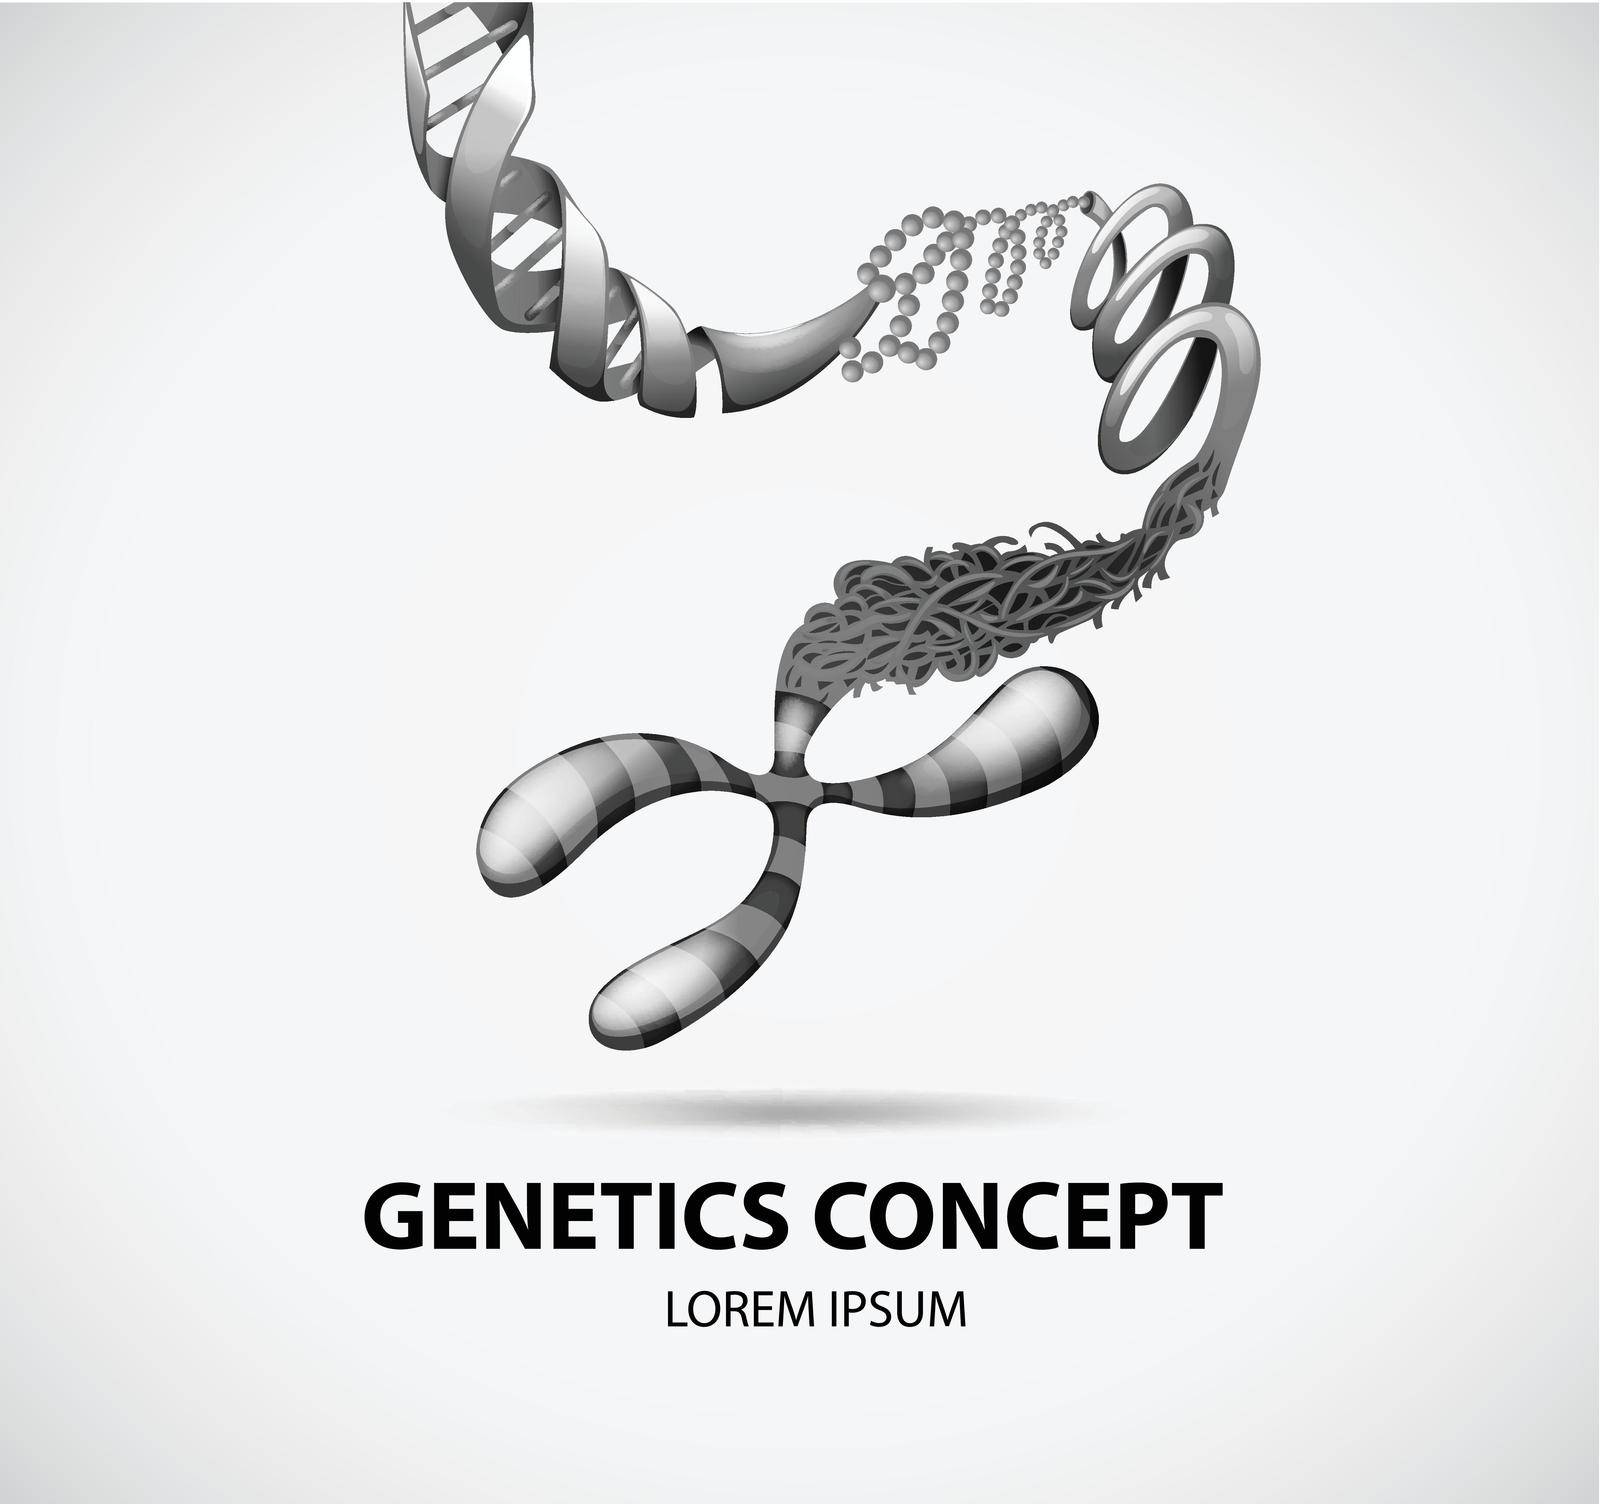 Flashcard of genetics concept on white background